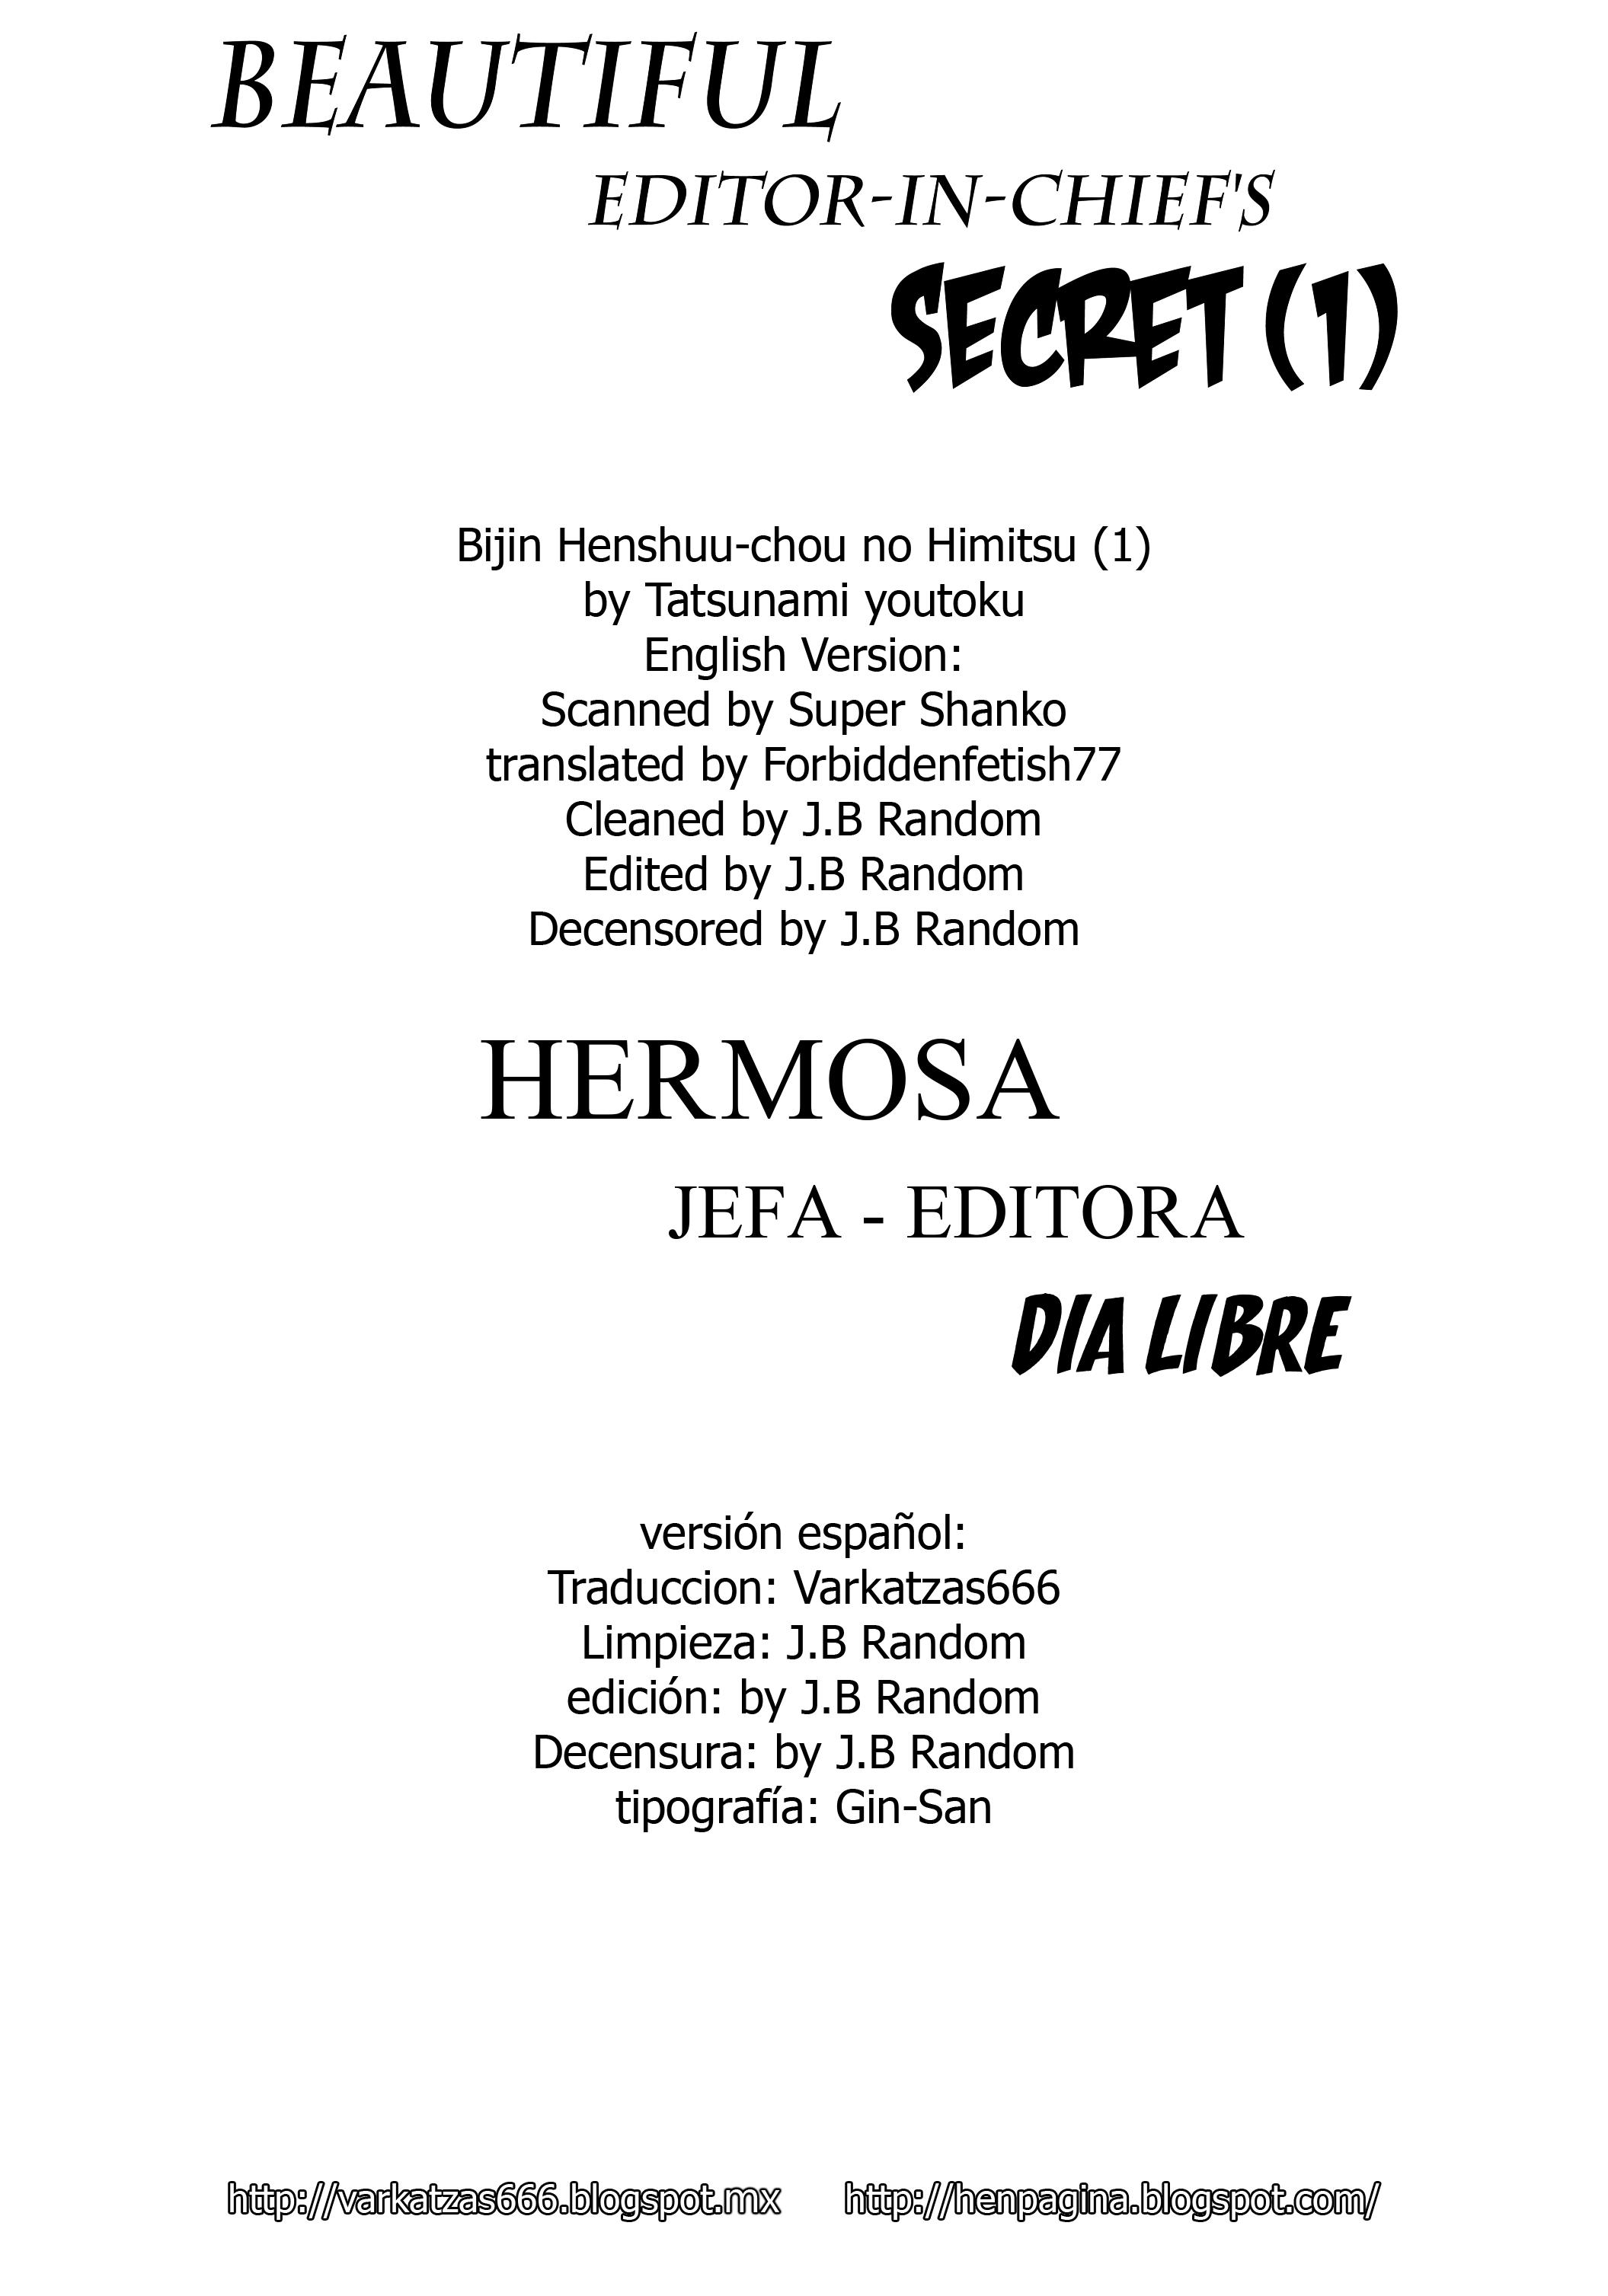 Hermosa Jefa Editora - Dia Libre (Sin Censura) Chapter-1 - 1